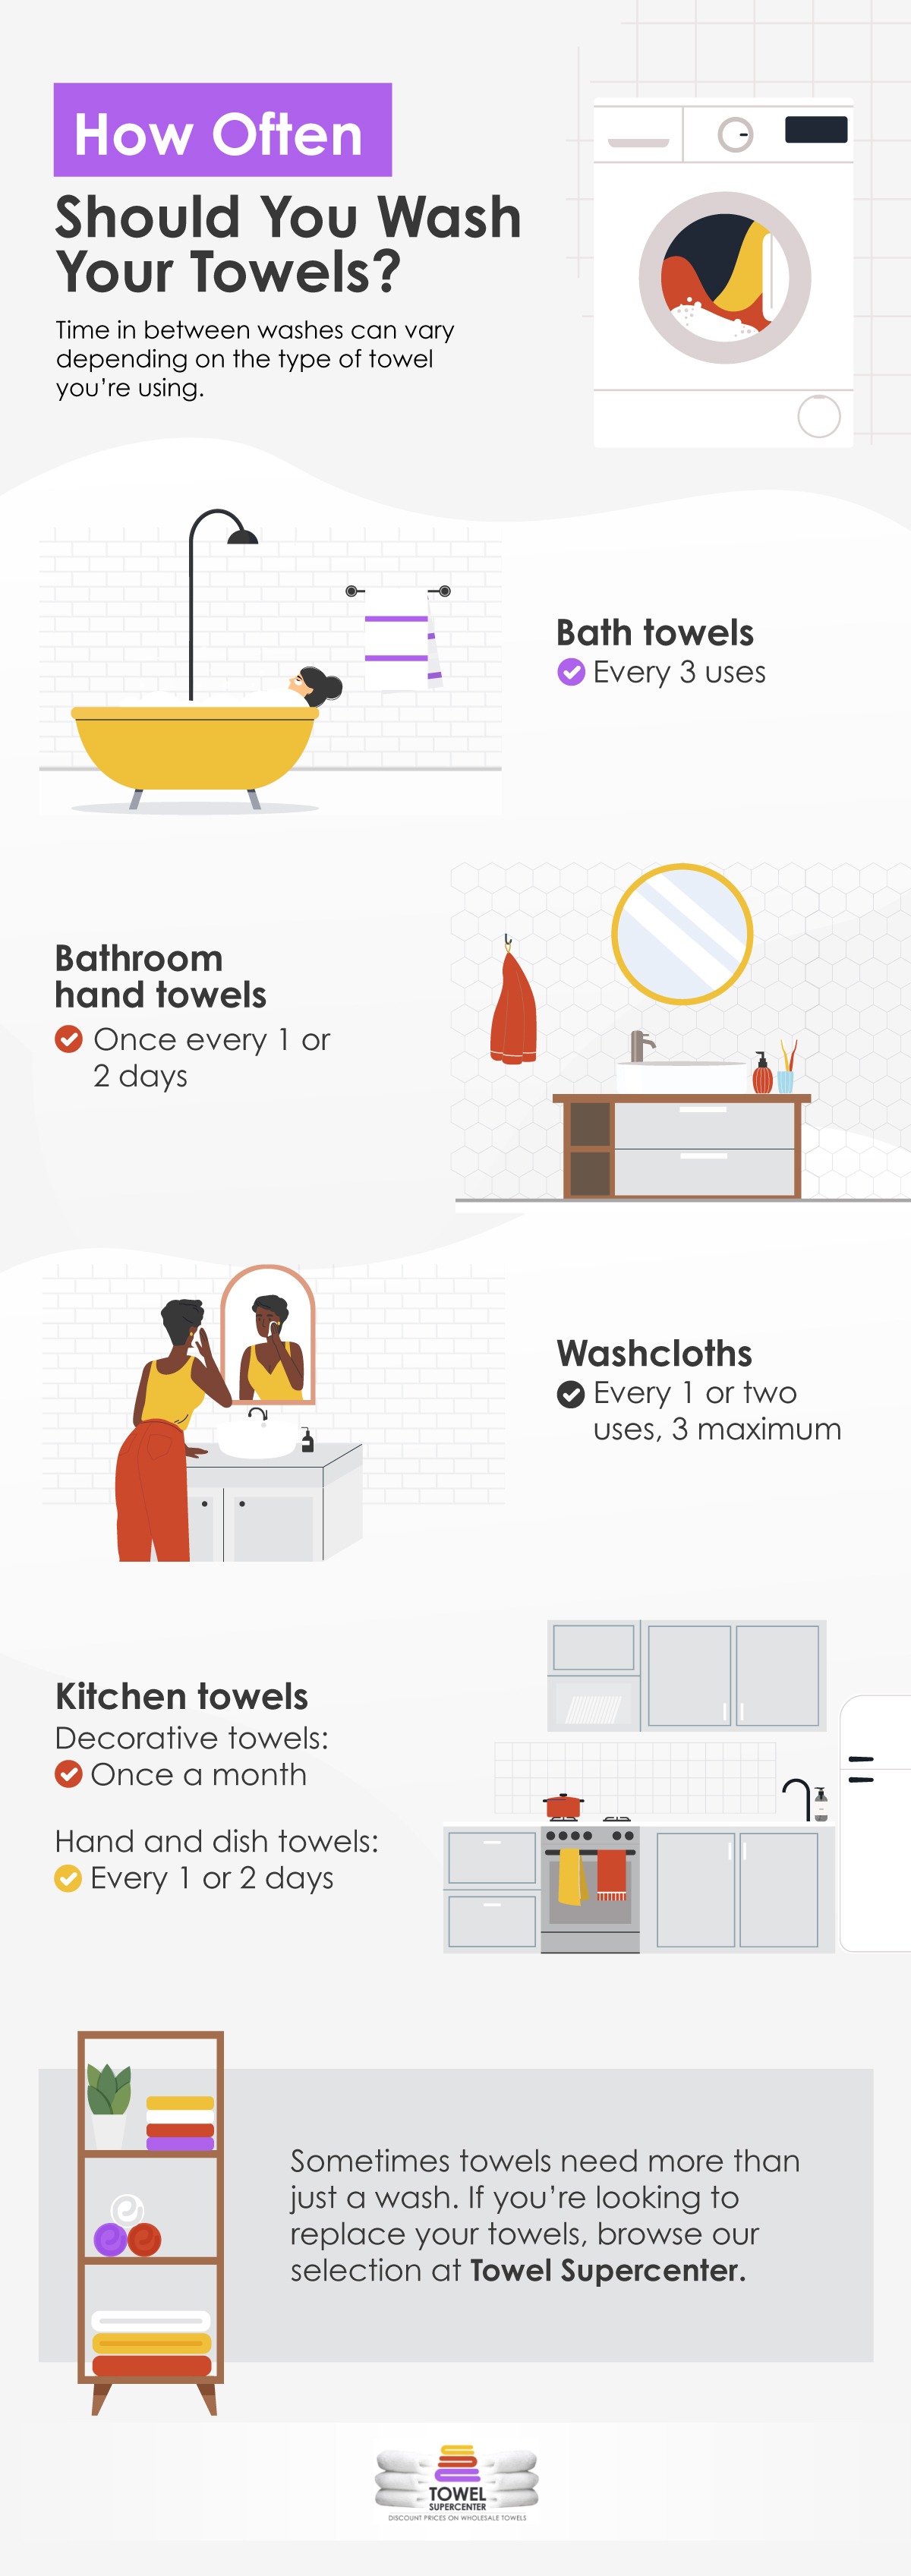 https://www.towelsupercenter.com/images/How-Often-Should-You-Wash-Your-Towels-R01.jpg